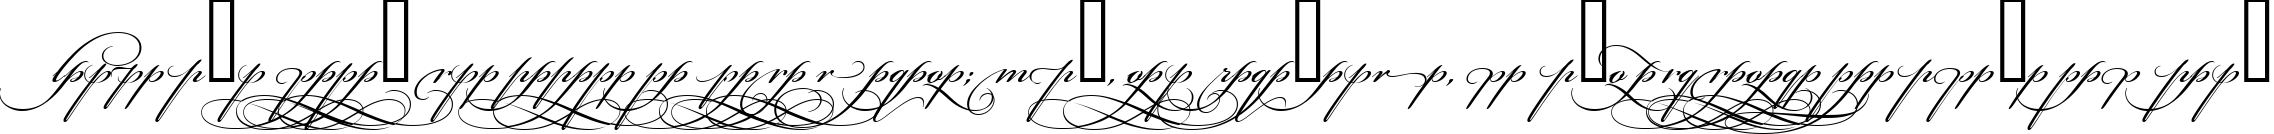 Пример написания шрифтом Bickham Script Alt Three текста на испанском